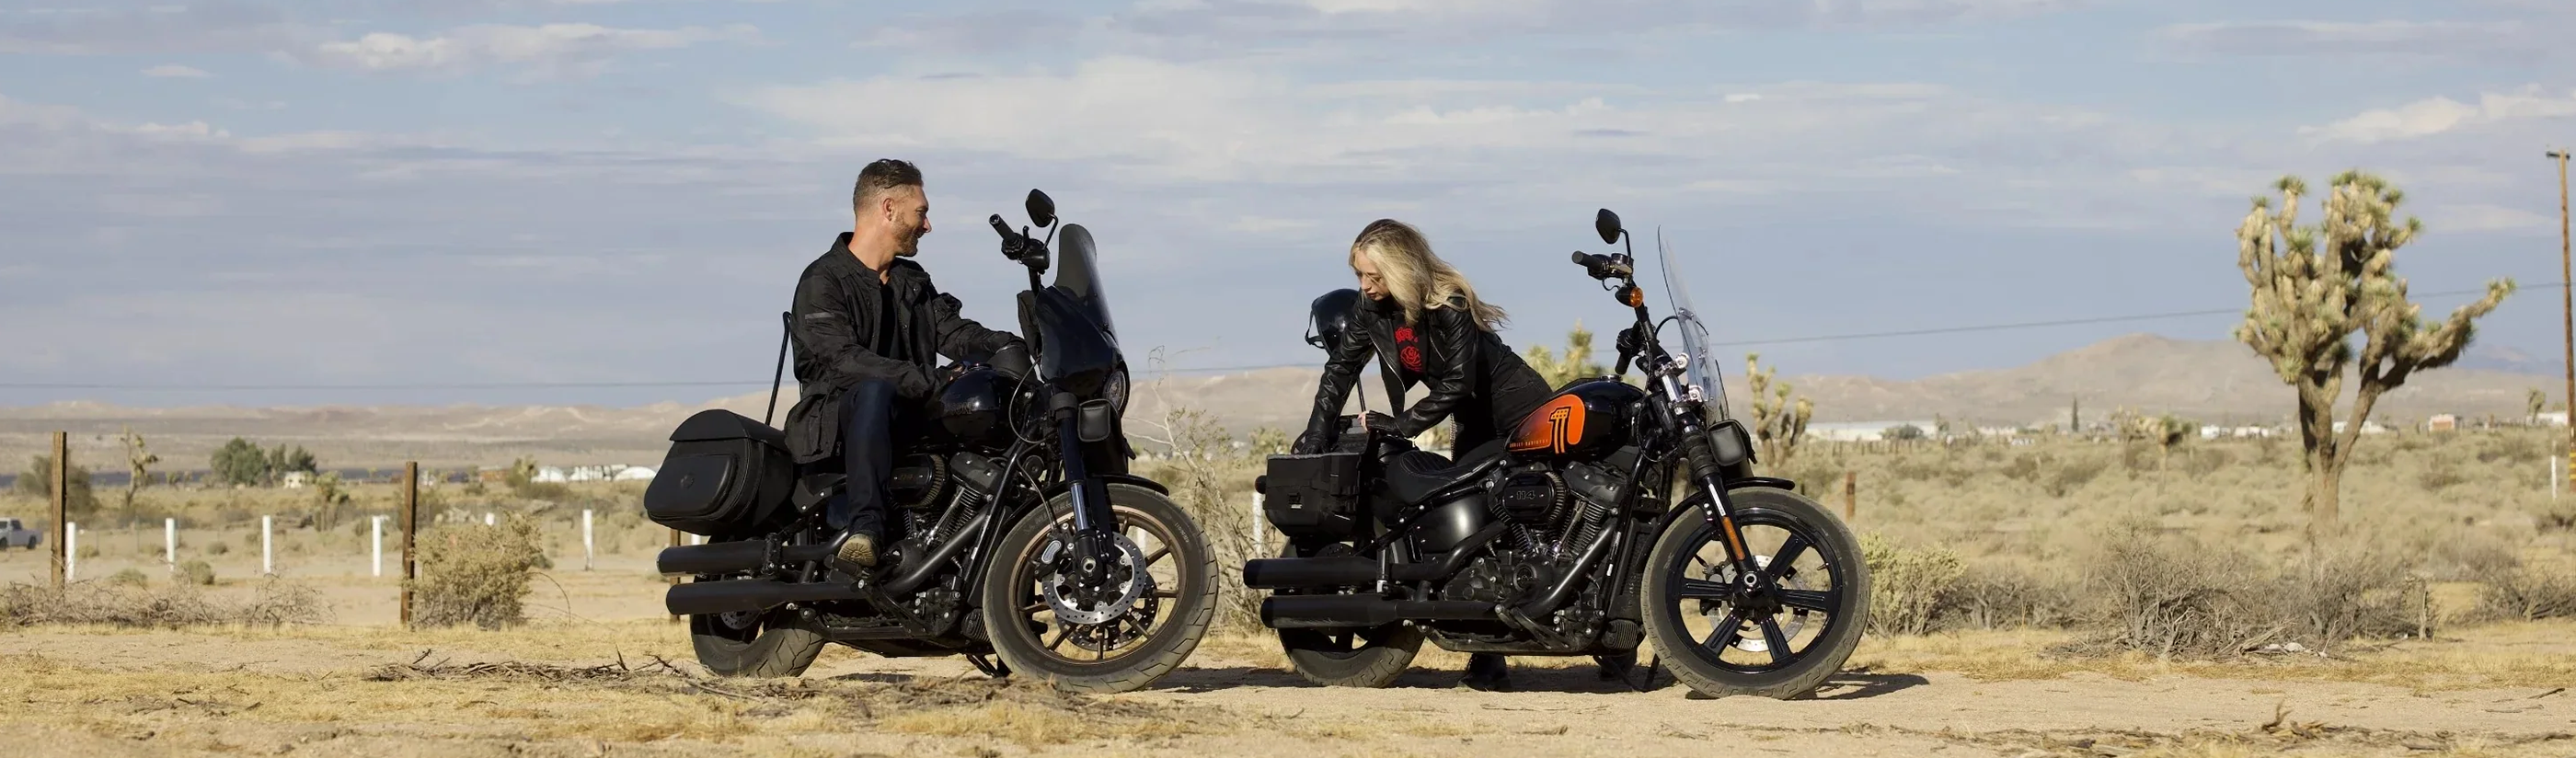 Harley Davidson Softail Breakout FXSB Motorcycle Seats